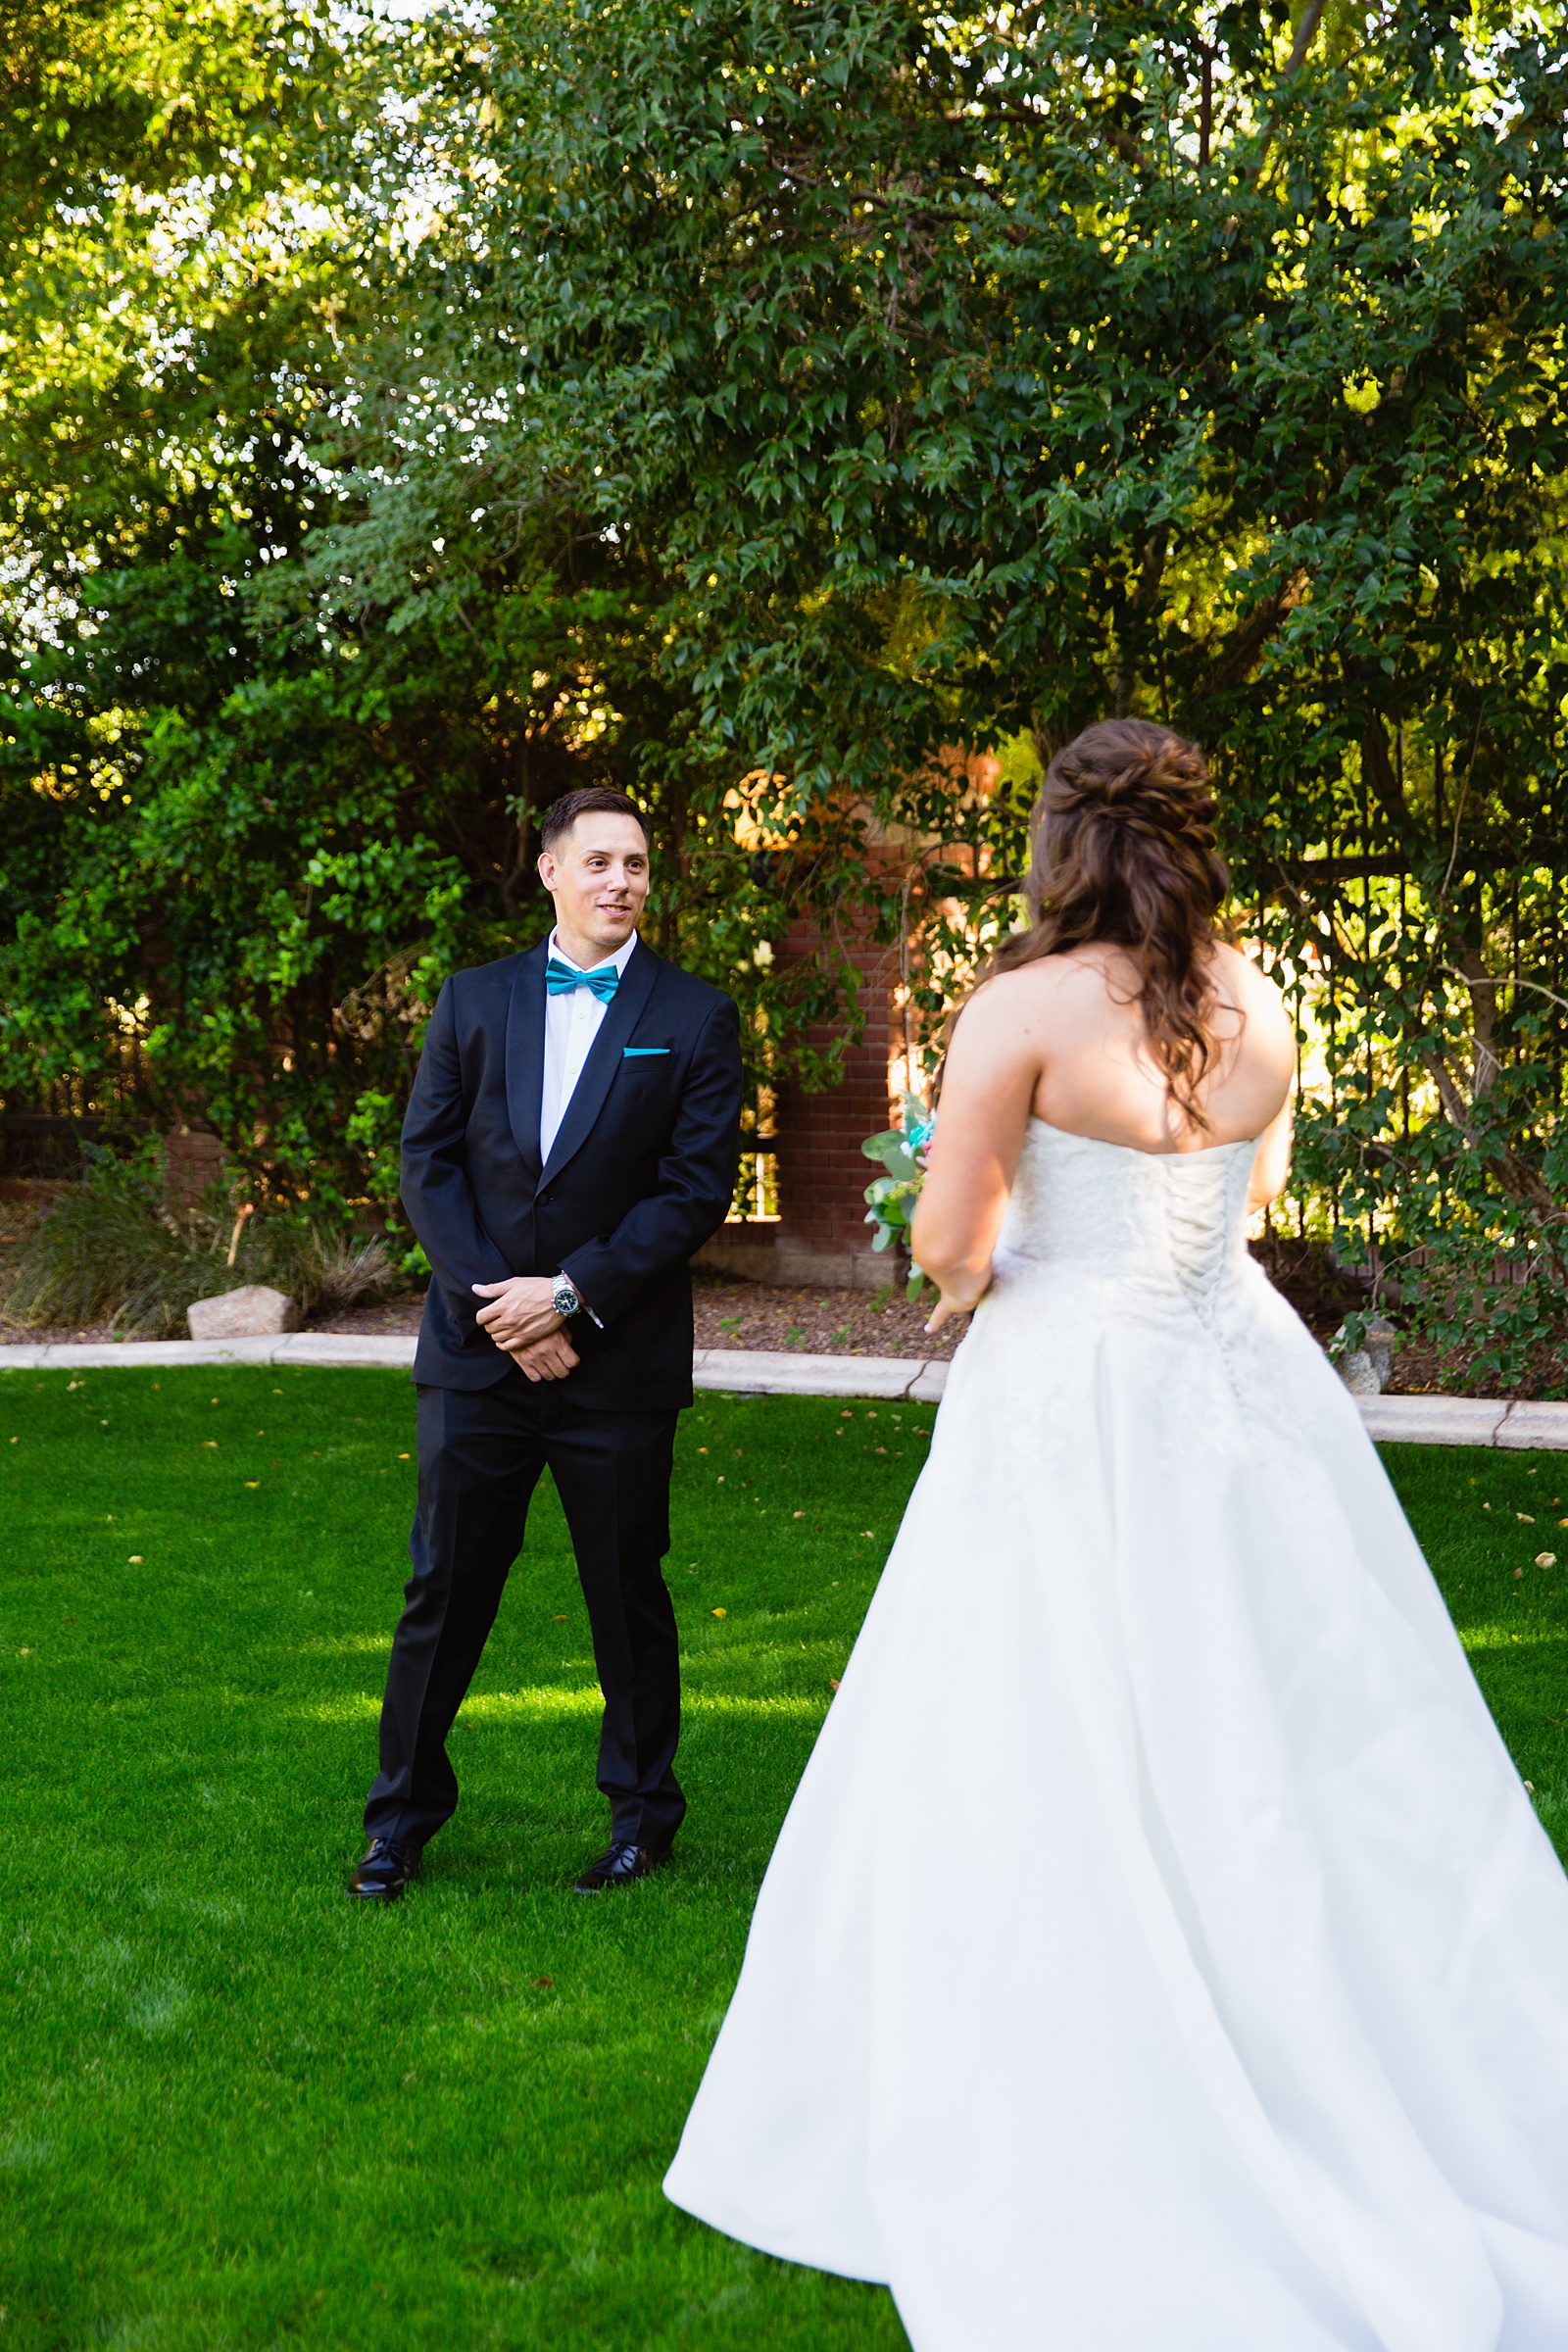 Bride and groom's first look at Stonebridge Manor by Phoenix wedding photographer PMA Photography.